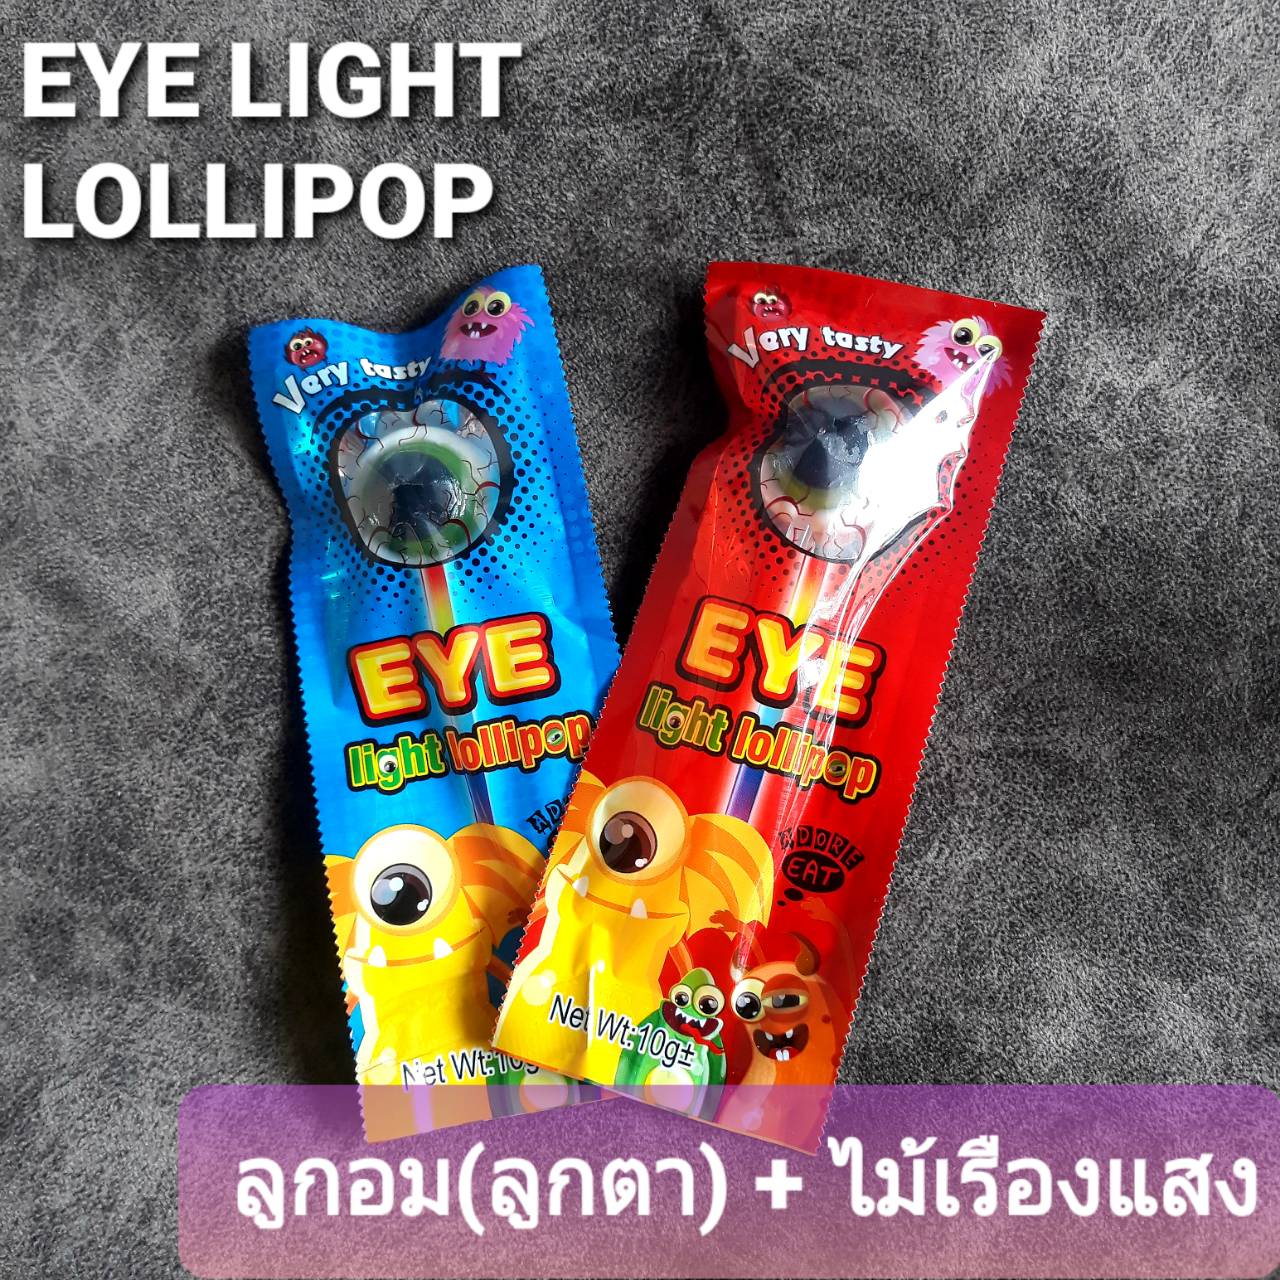 Eye Light Lollipop ลูกอม(ลูกตา) ไม้เรืองแสง เล่นได้สนุกๆ คละสี (ราคานี้ได้ 2 ชิ้นนะคะ)